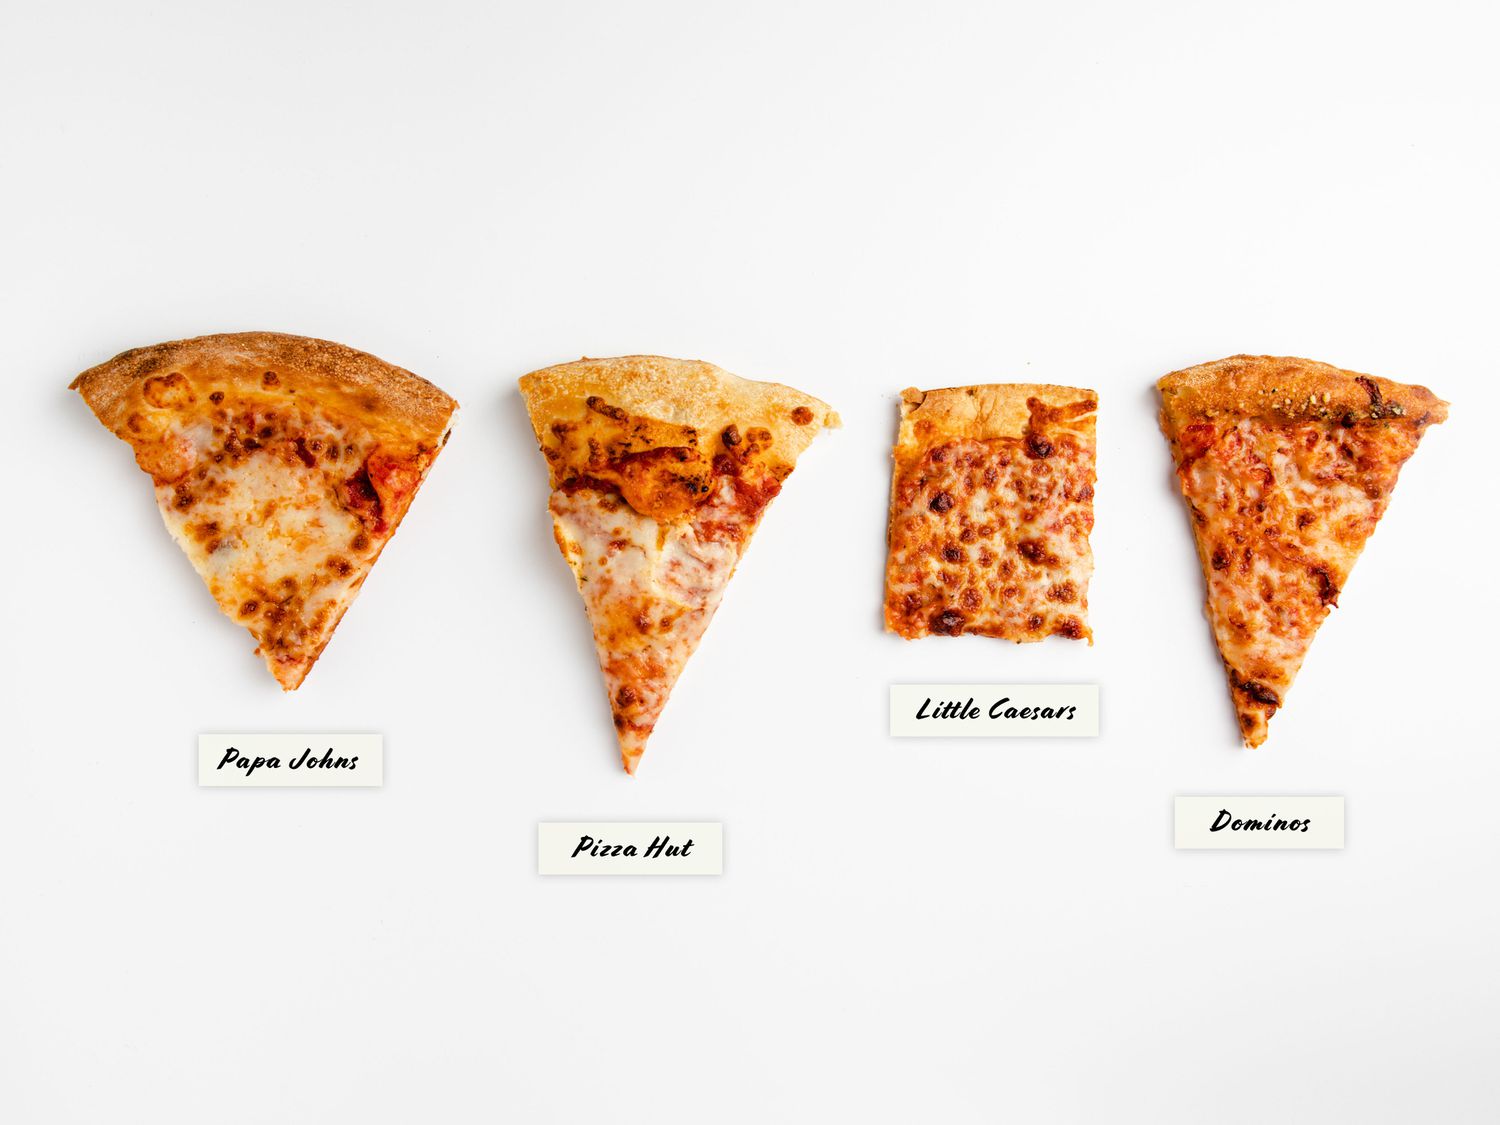 Which Pizza is Best in Taste in DominoS